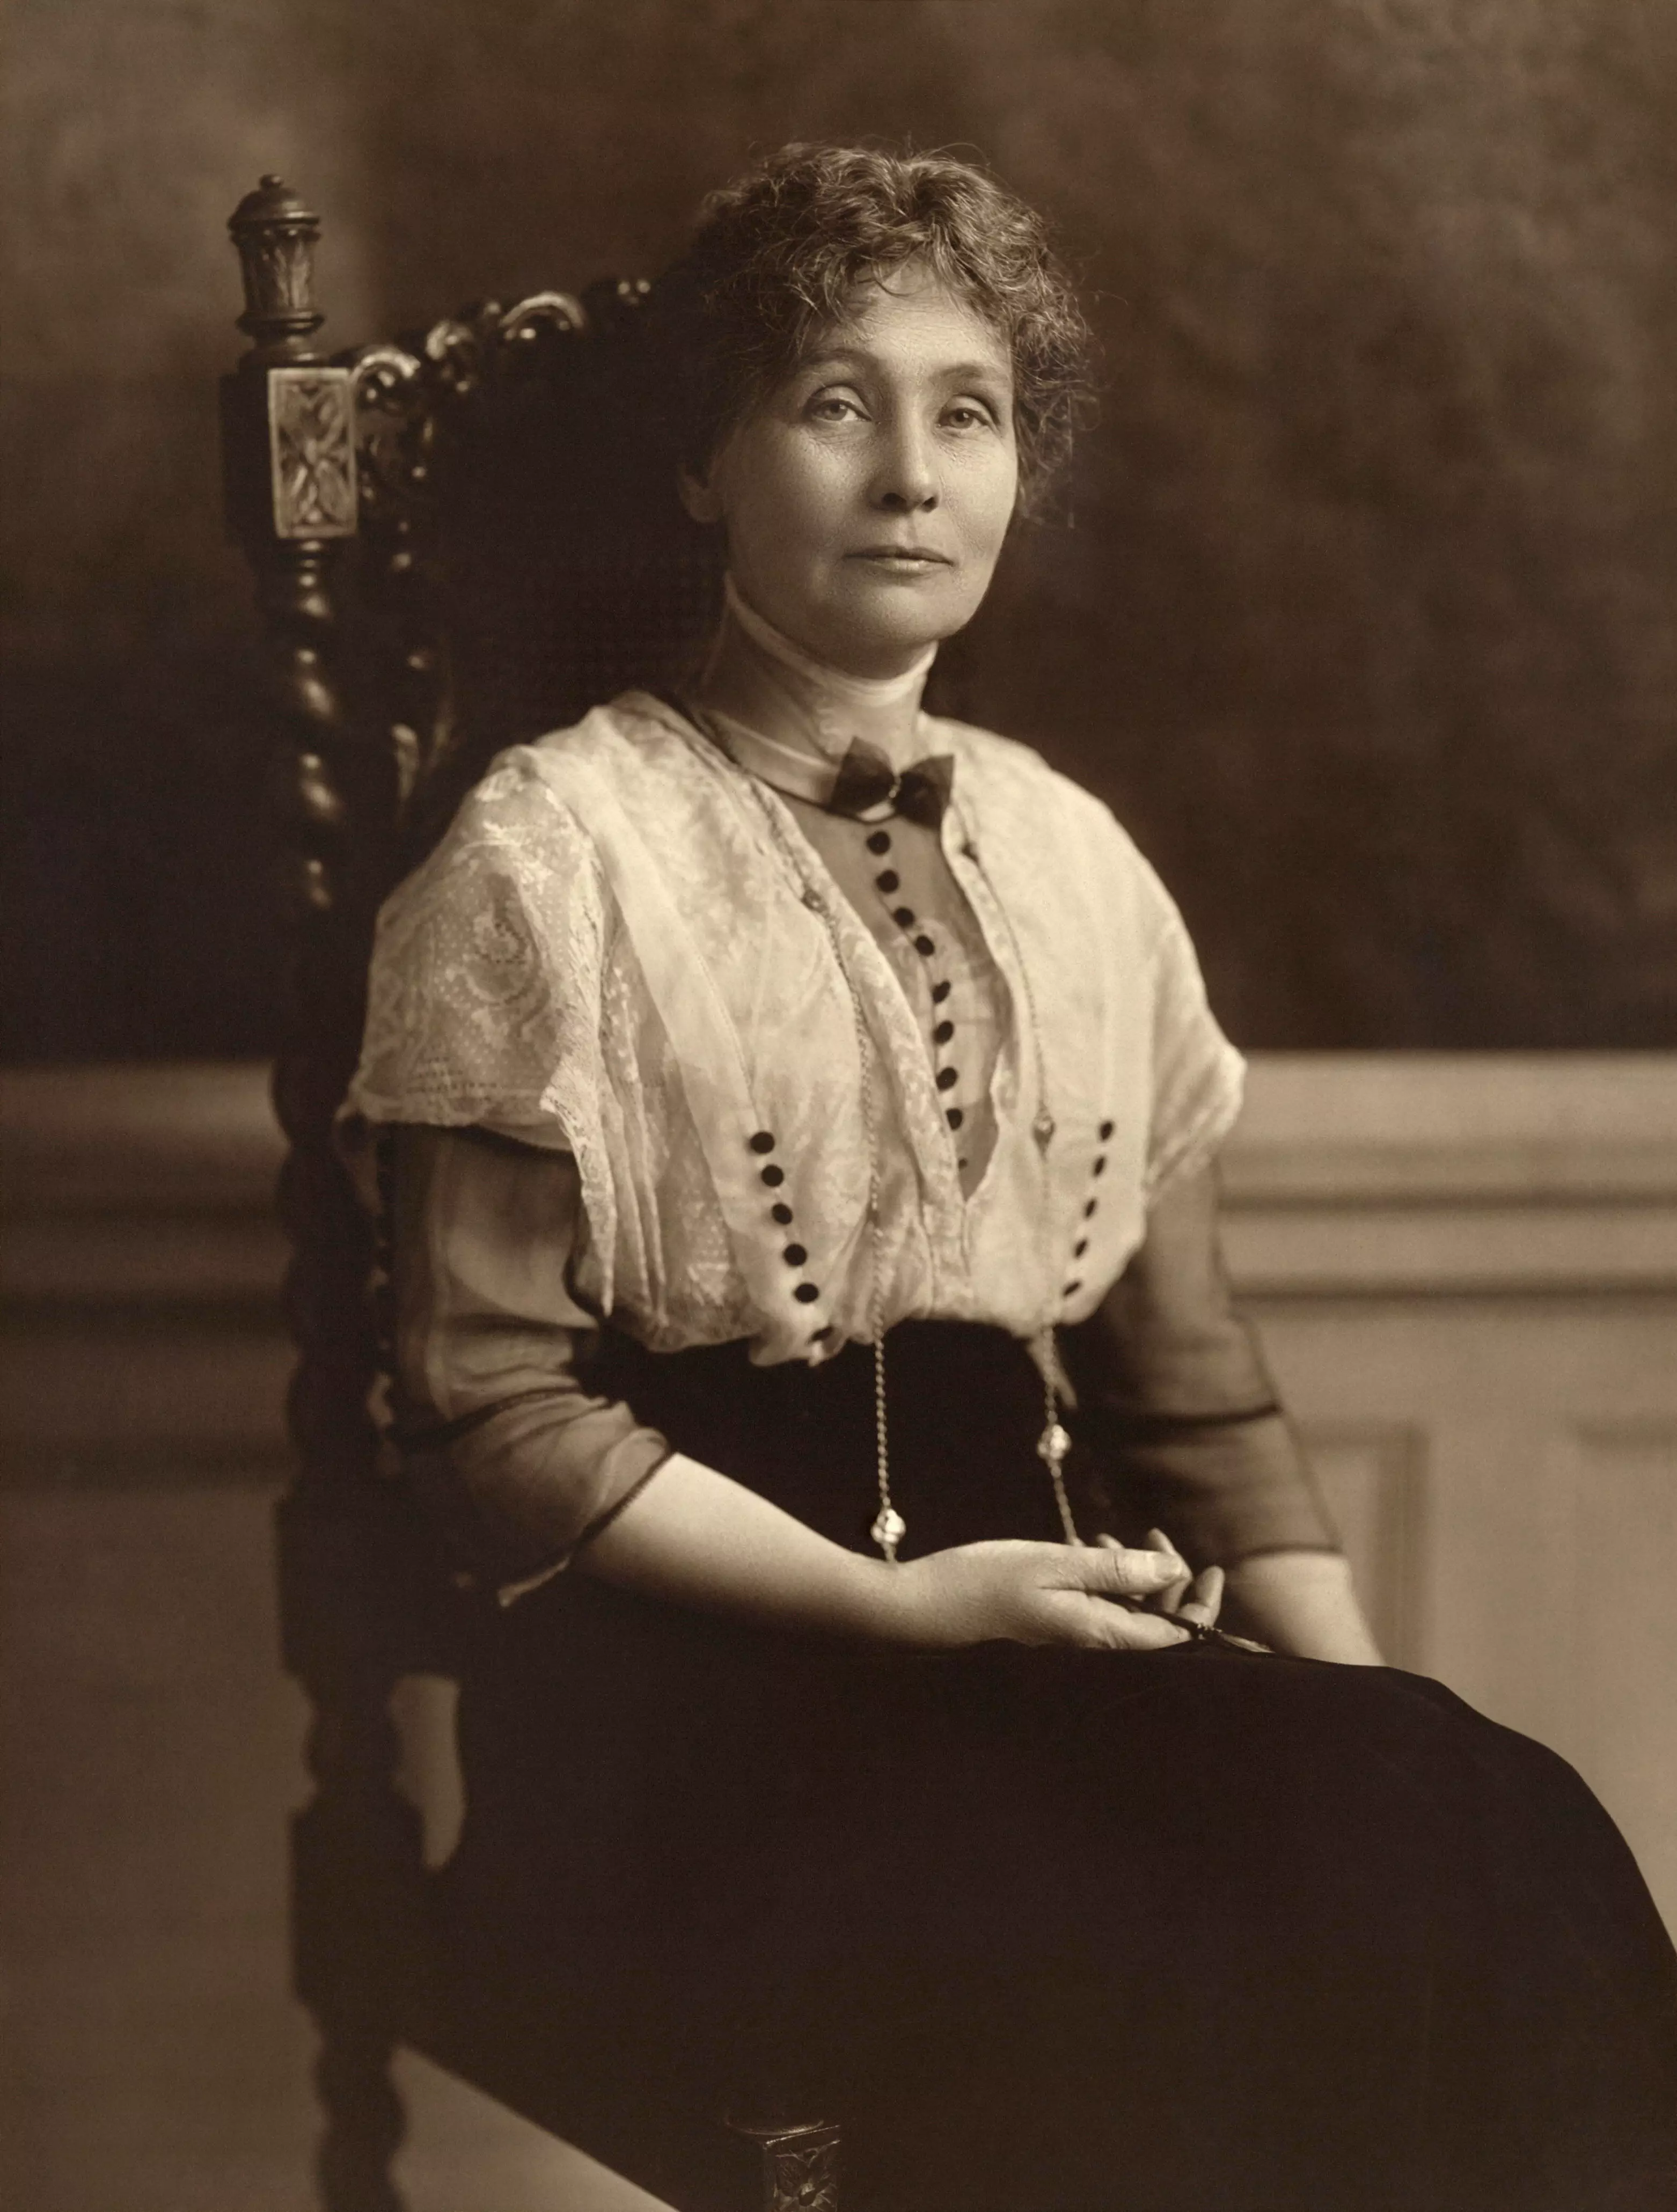 Emmeline Pankhurst founded the Women's Social and Political Union (